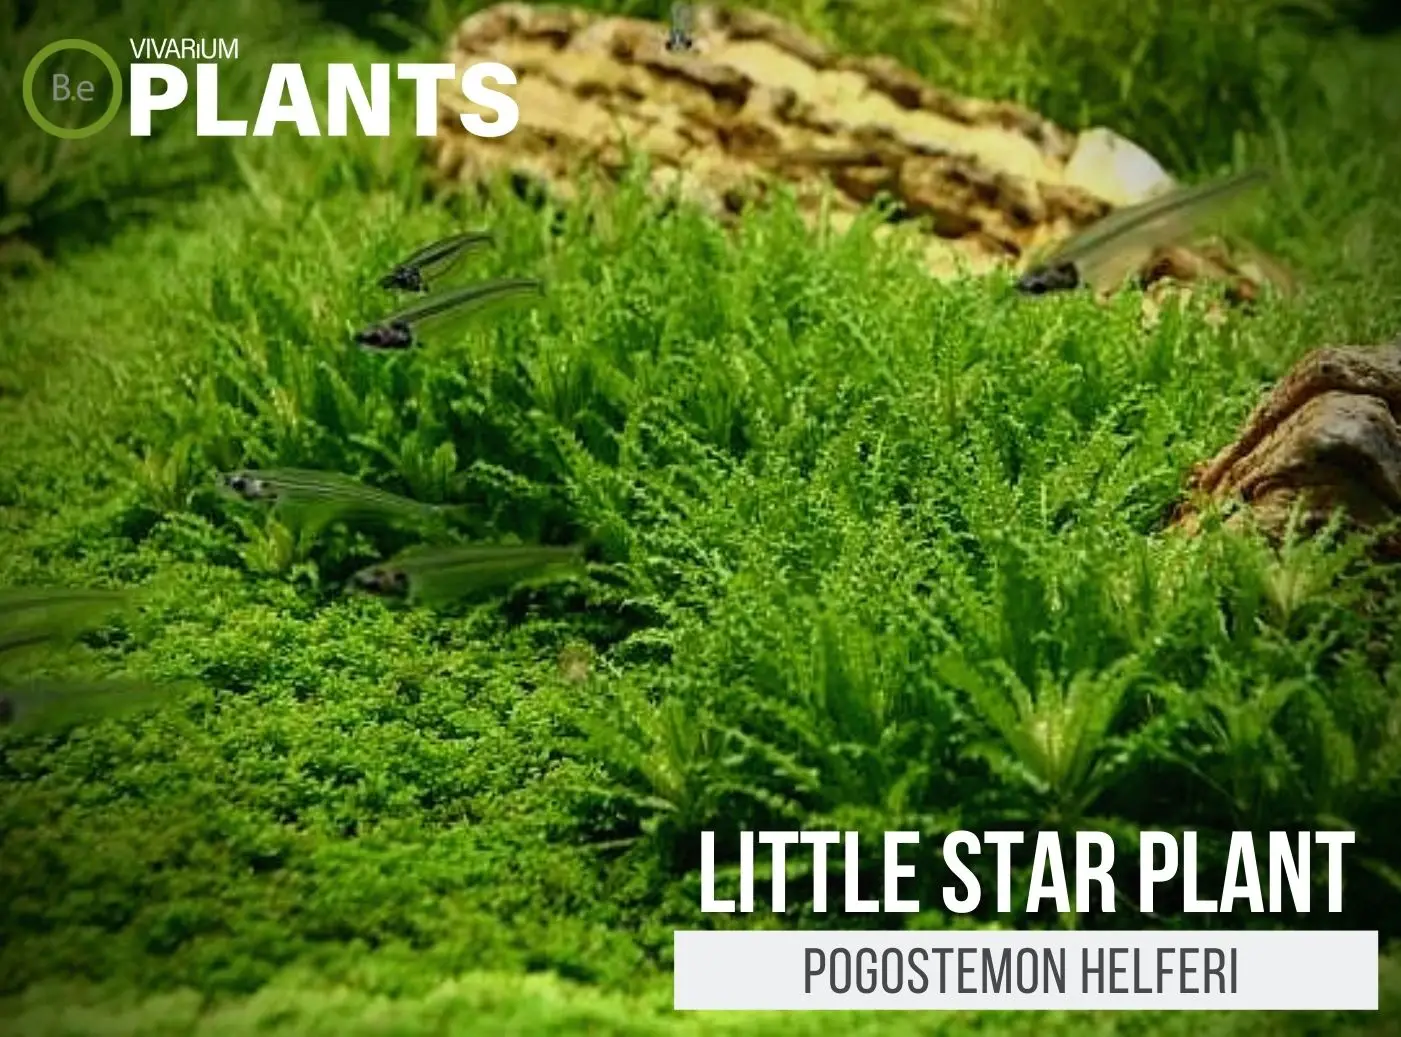 Pogostemon helferi "Little Star Plant" Plant Care Guide